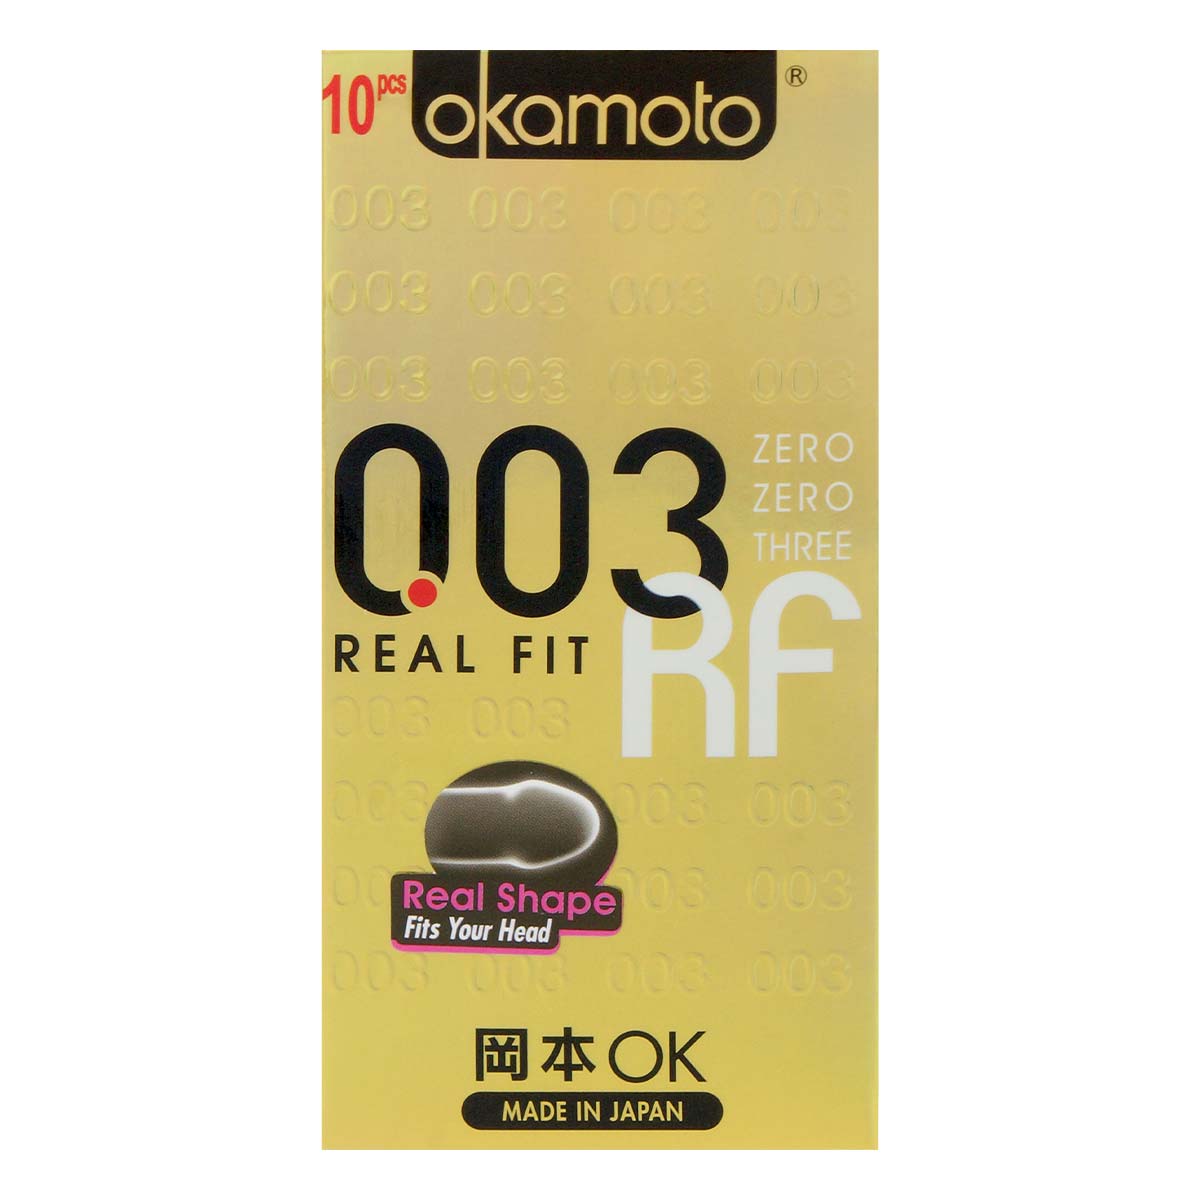 Okamoto 0.03 Realfit 10's Pack Latex Condom-thumb_2